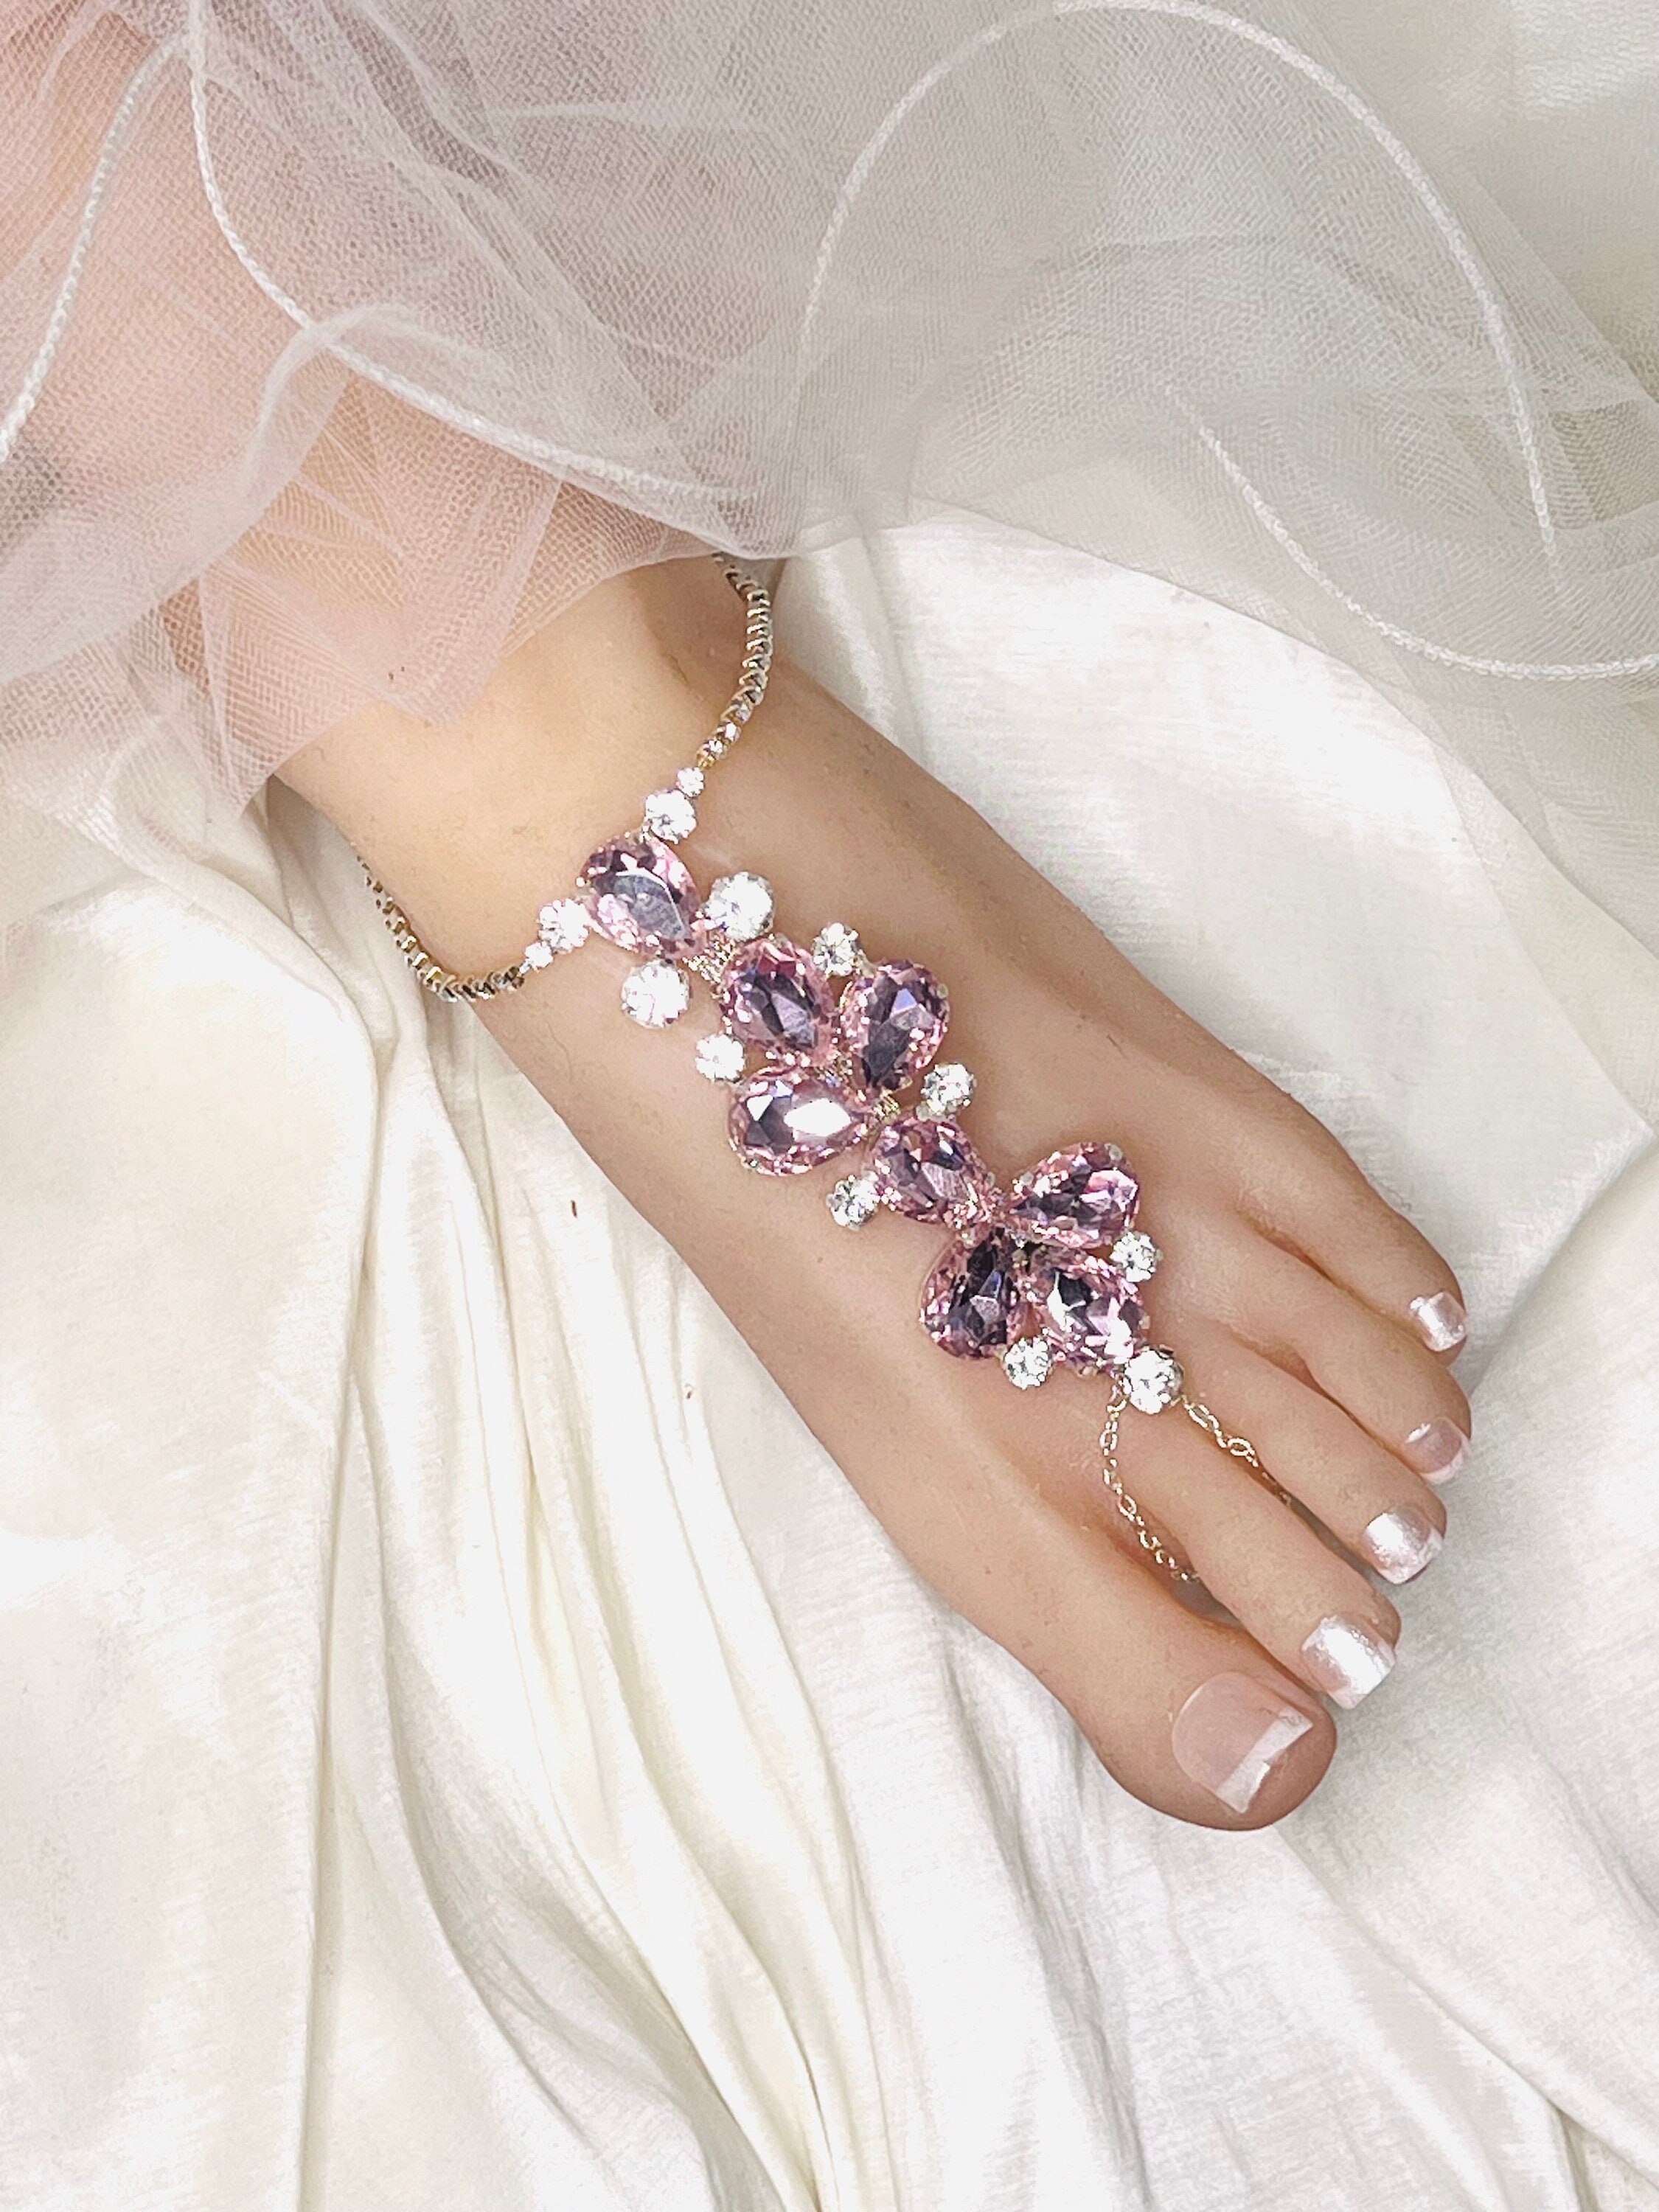 Moonlight NEW SILK WEDDING dress Bridal ball gown PEARL Corset pick up  skirt 10 | eBay